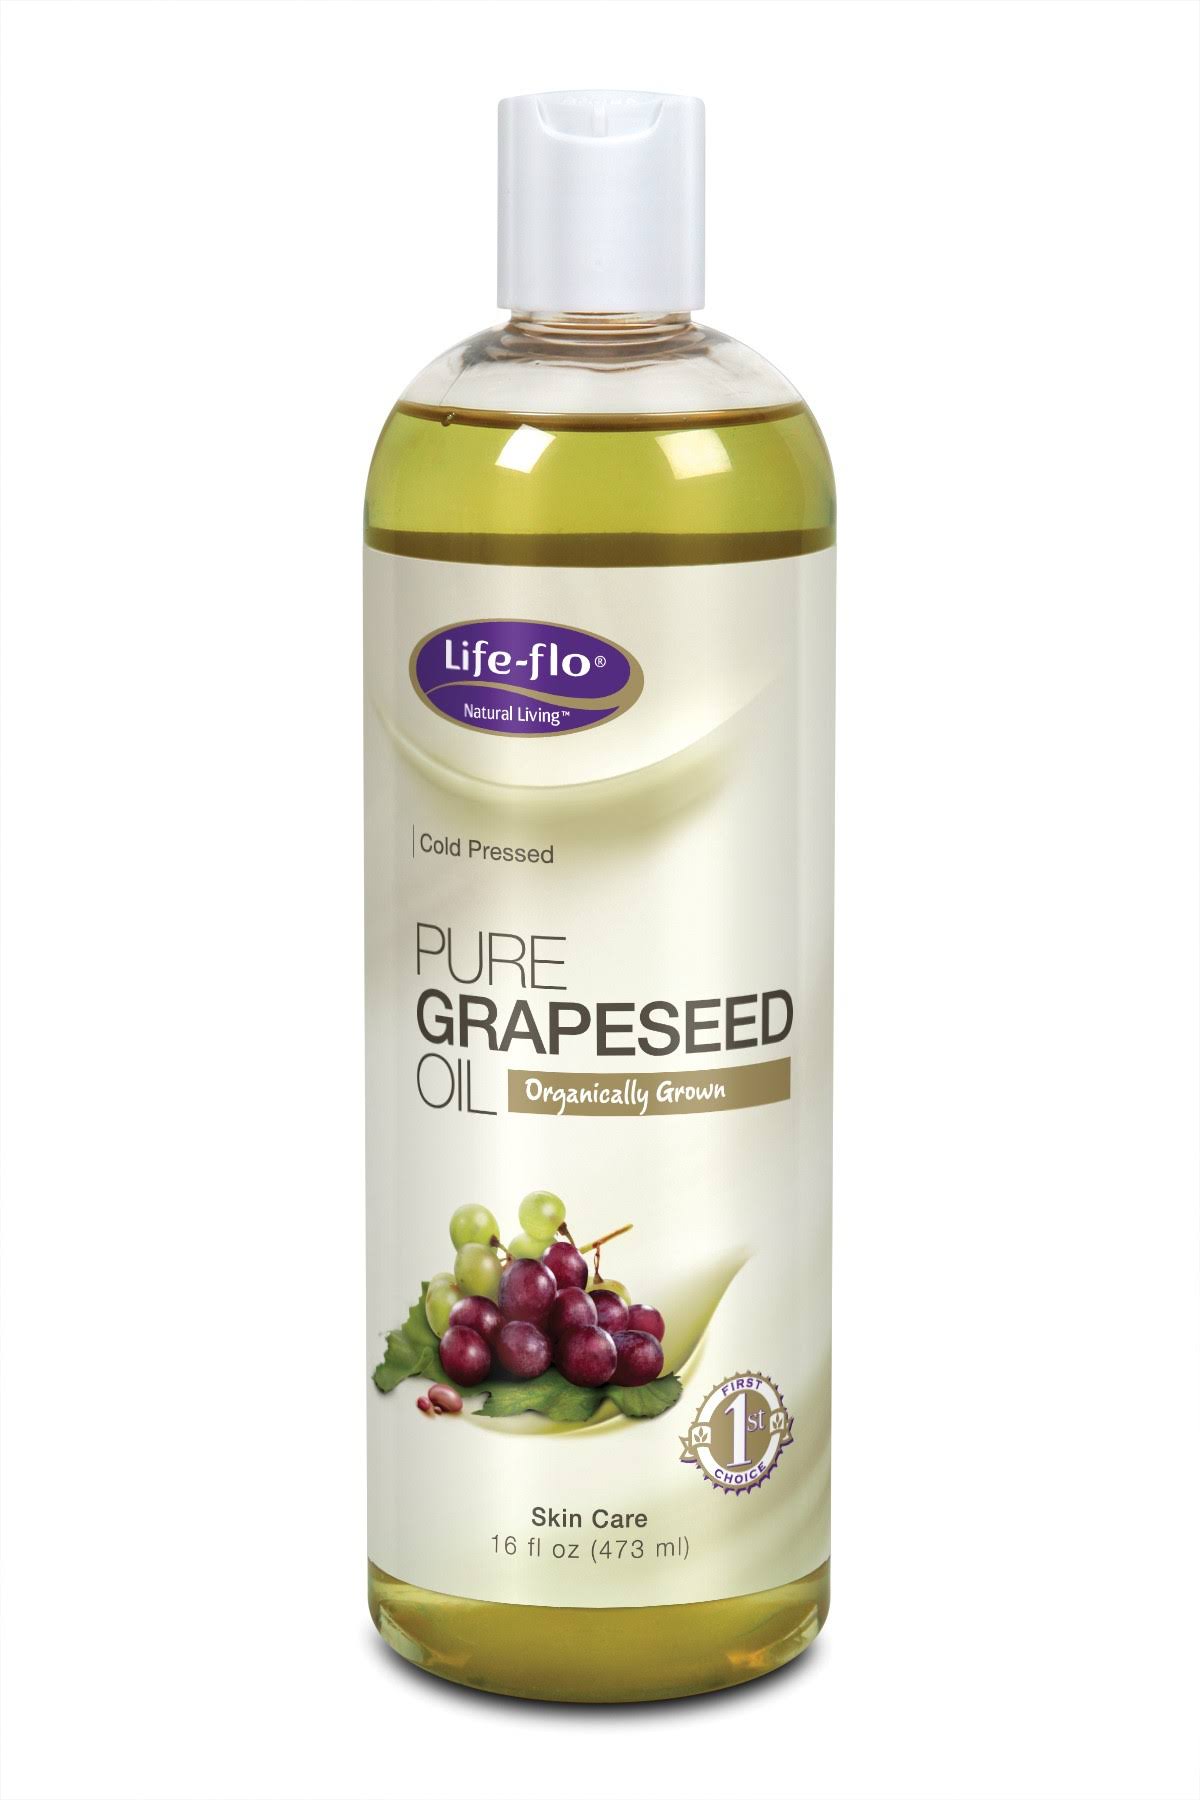 Life-flo Pure Grapeseed Oil - Organic, 16oz